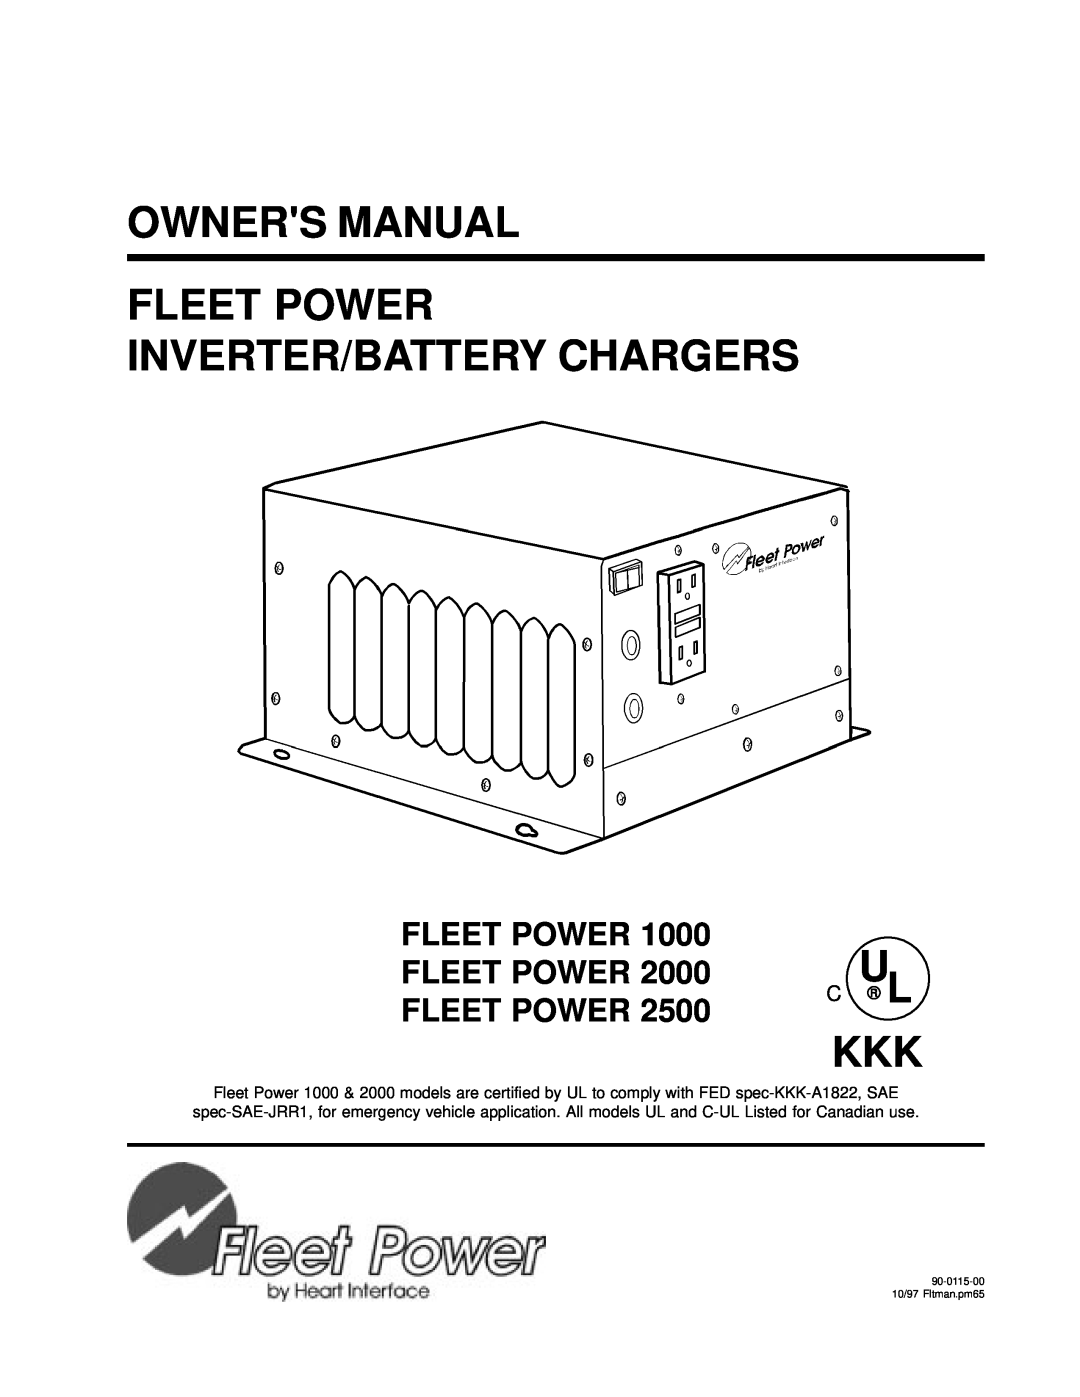 Xantrex Technology owner manual Owners Manual, Fleet Power Inverter/Battery Chargers, FLEET POWER FLEET POWER 2000UL 